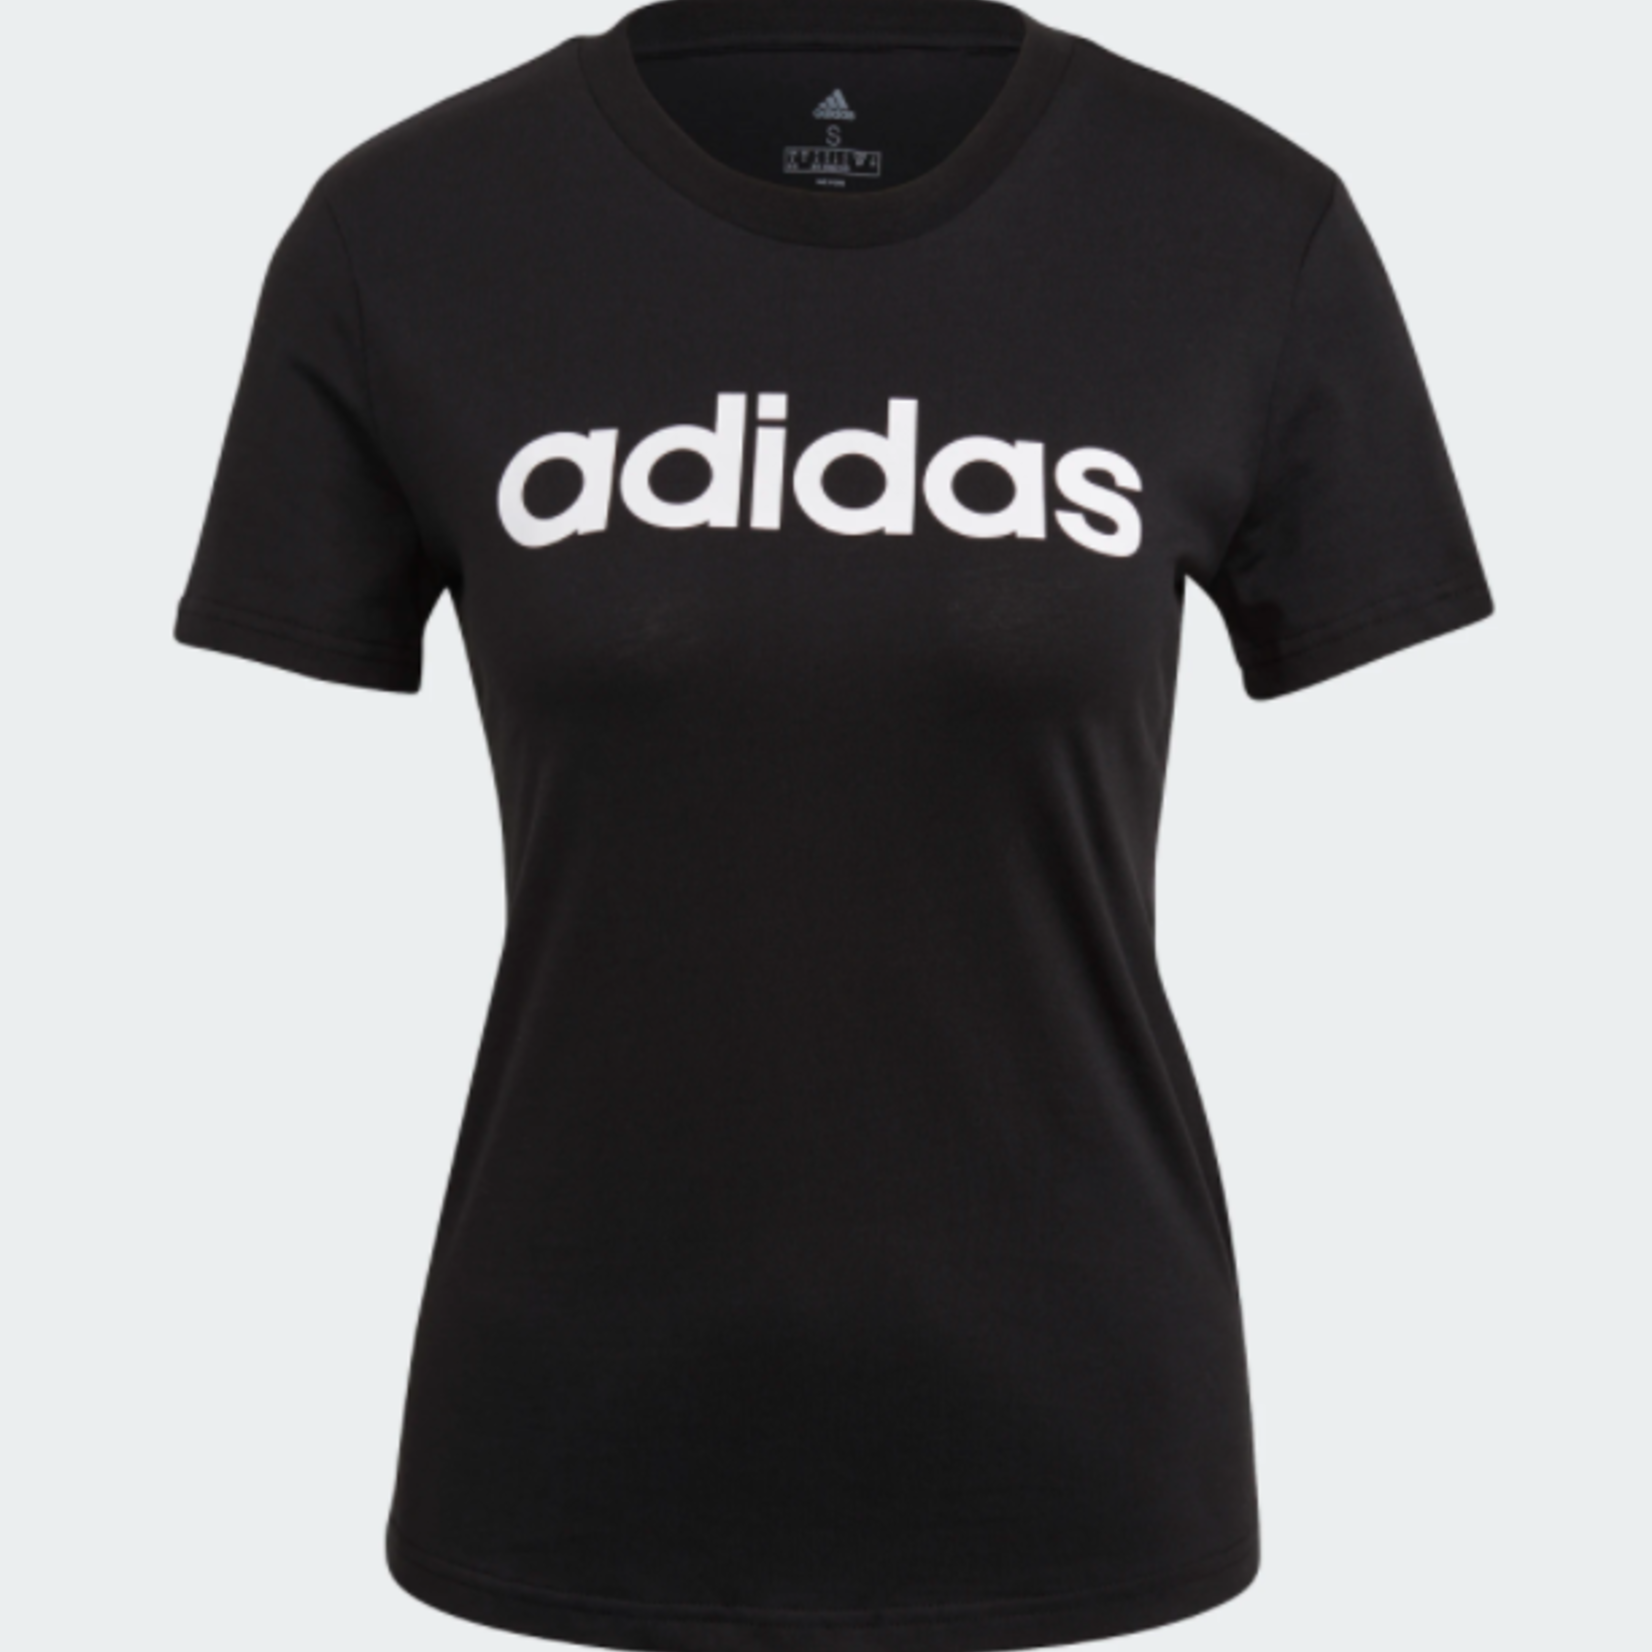 Adidas Adidas T-Shirt, Loungewear Essentials Slim Logo, Ladies